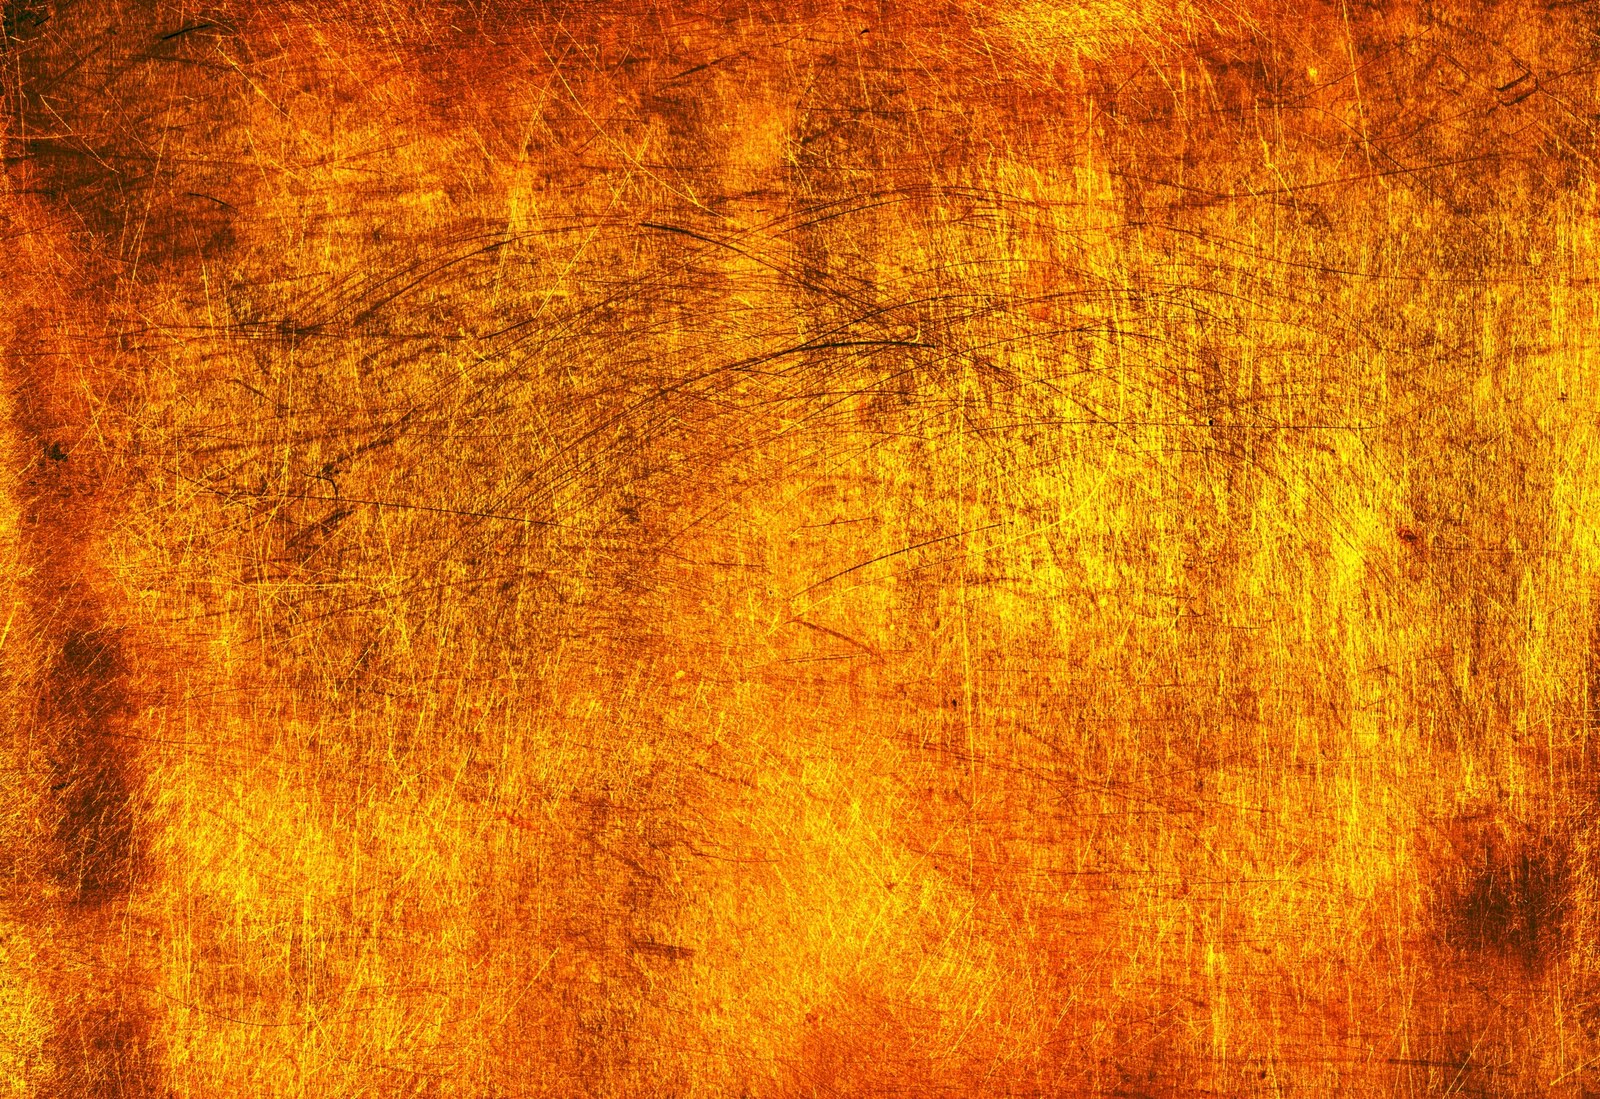 gold textured wallpaper,orange,yellow,brown,amber,wood